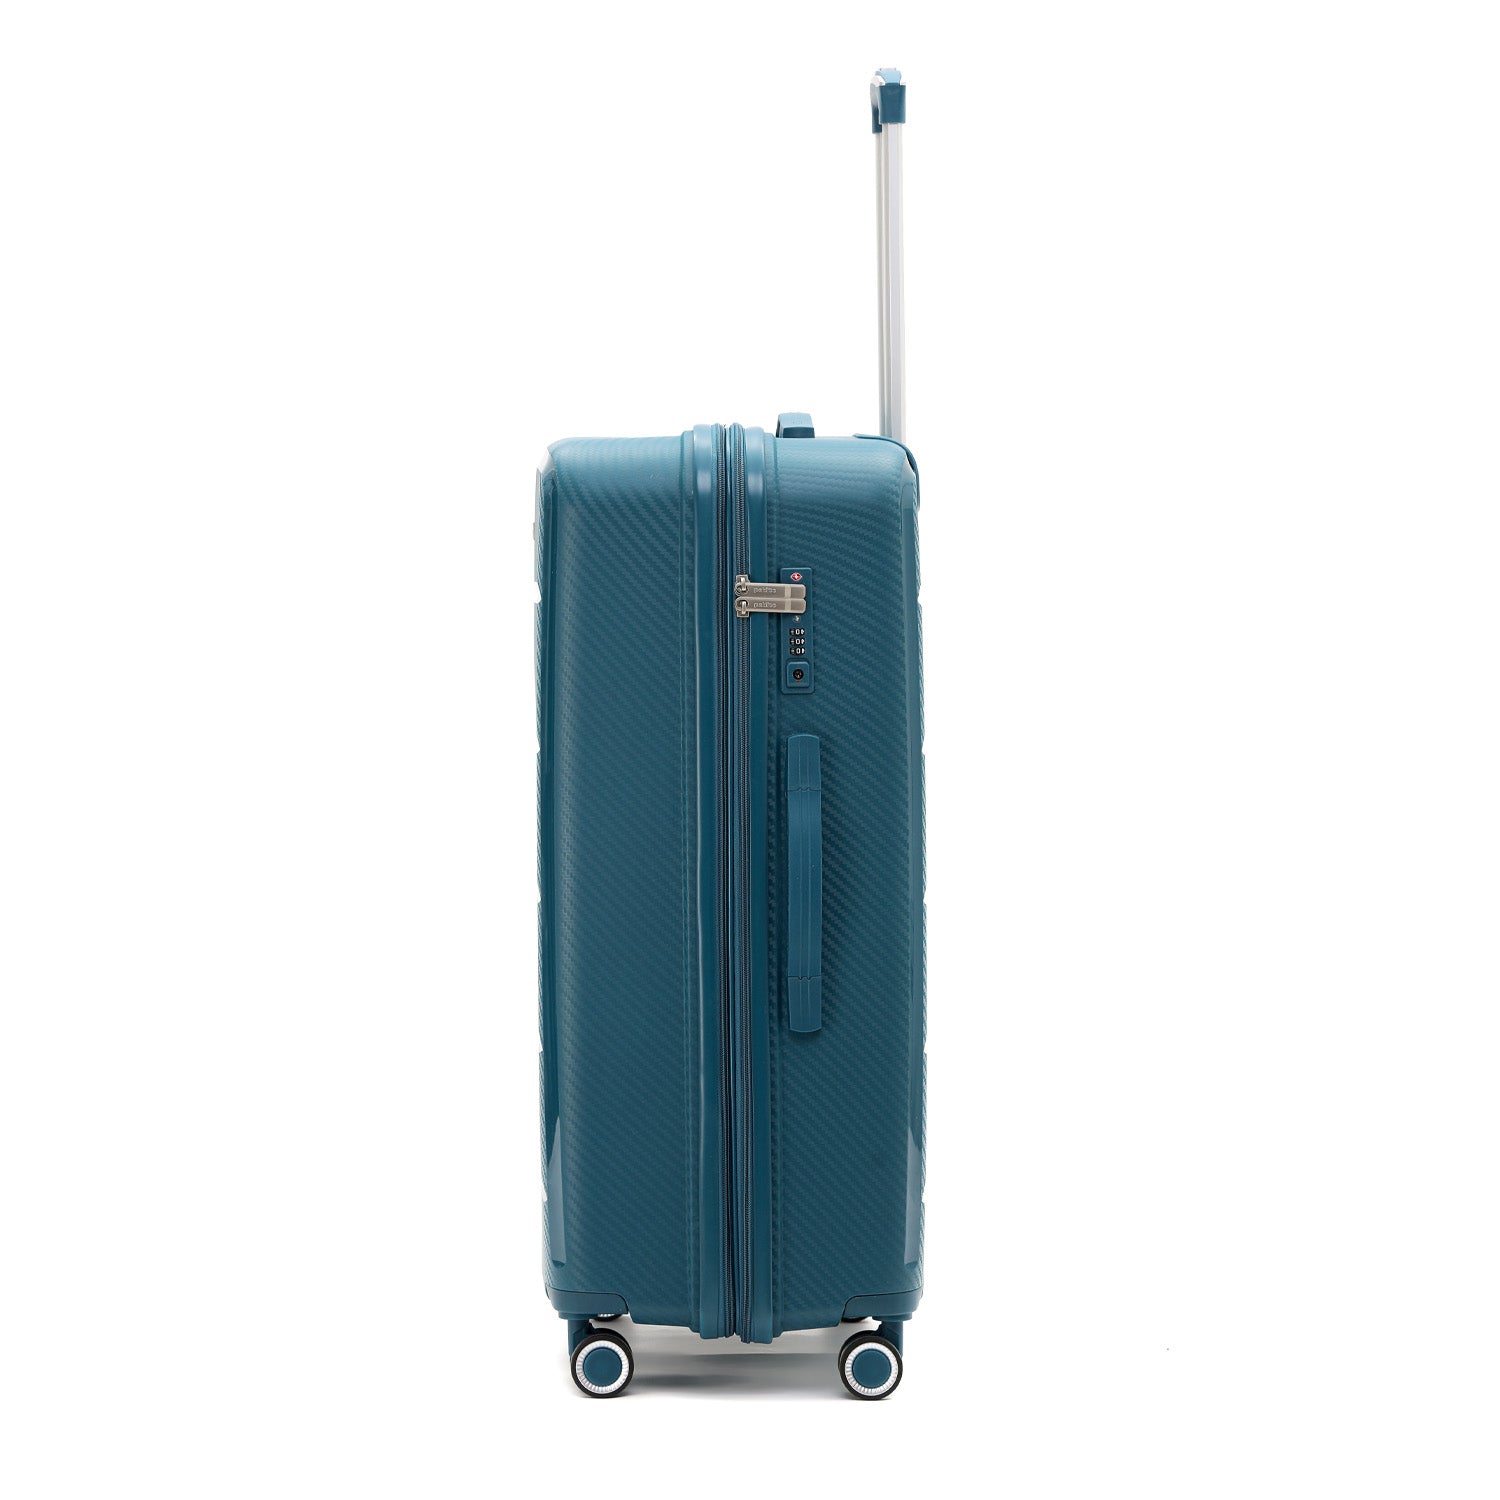 Paklite - PA7350 Large 75cm spinner suitcase - Blue-3